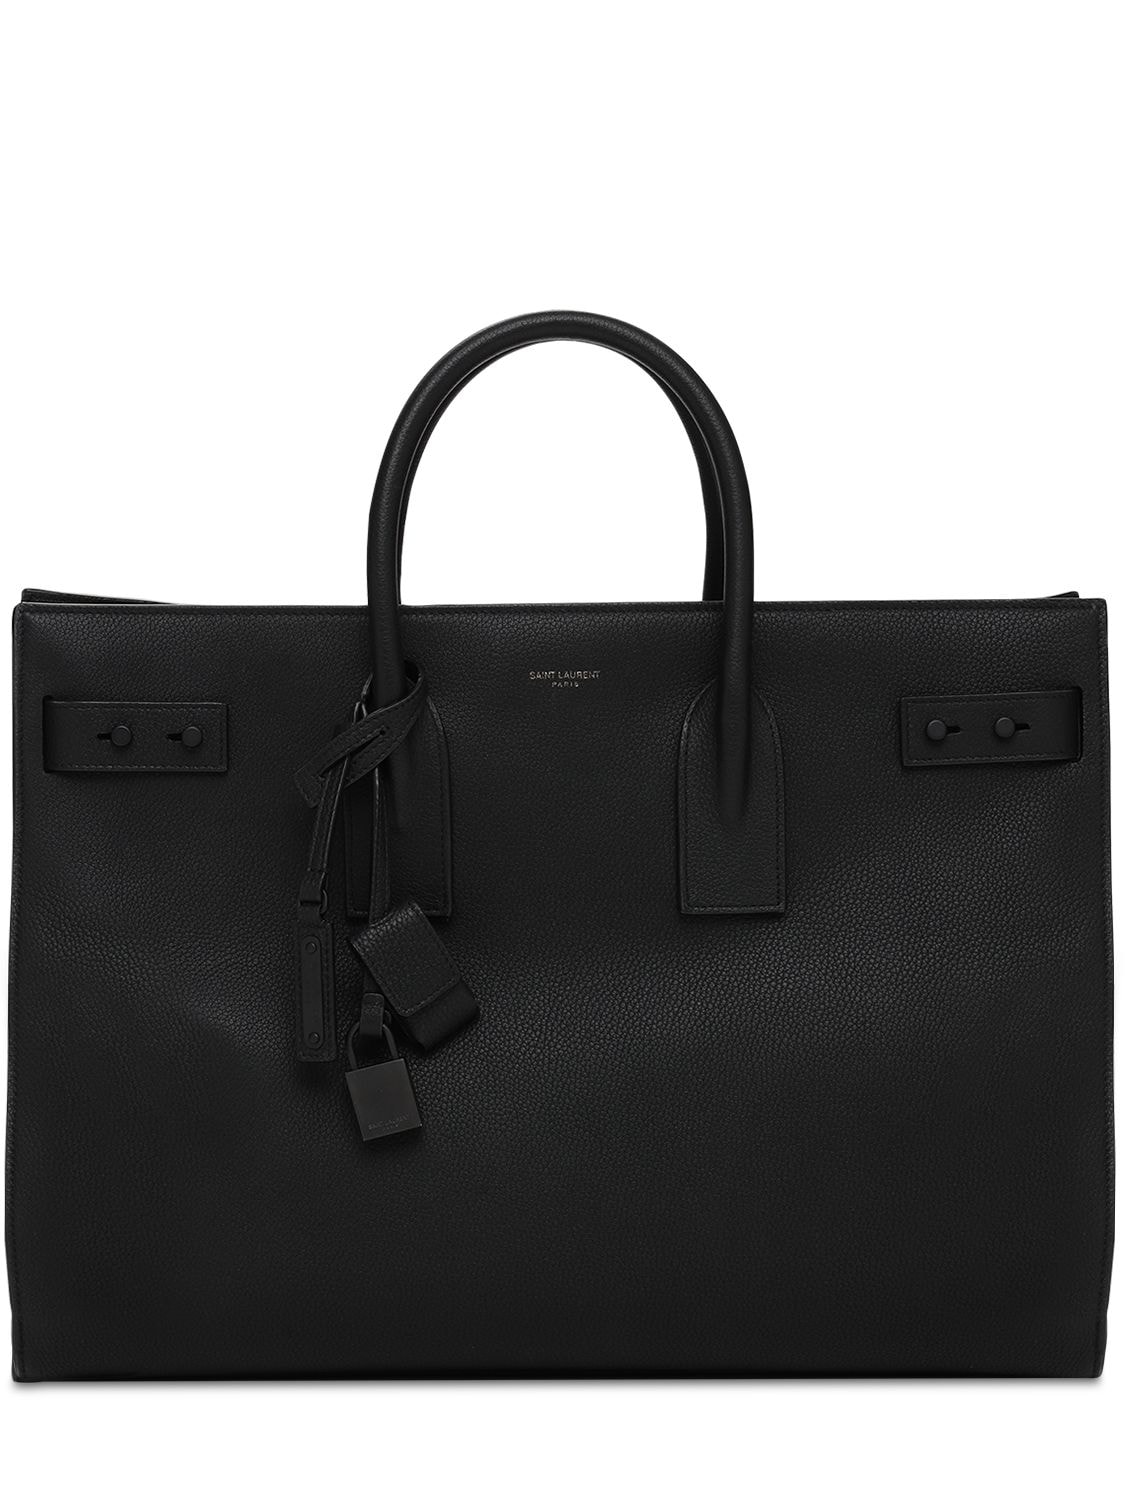 Saint Laurent Logo Leather Tote Bag In Black